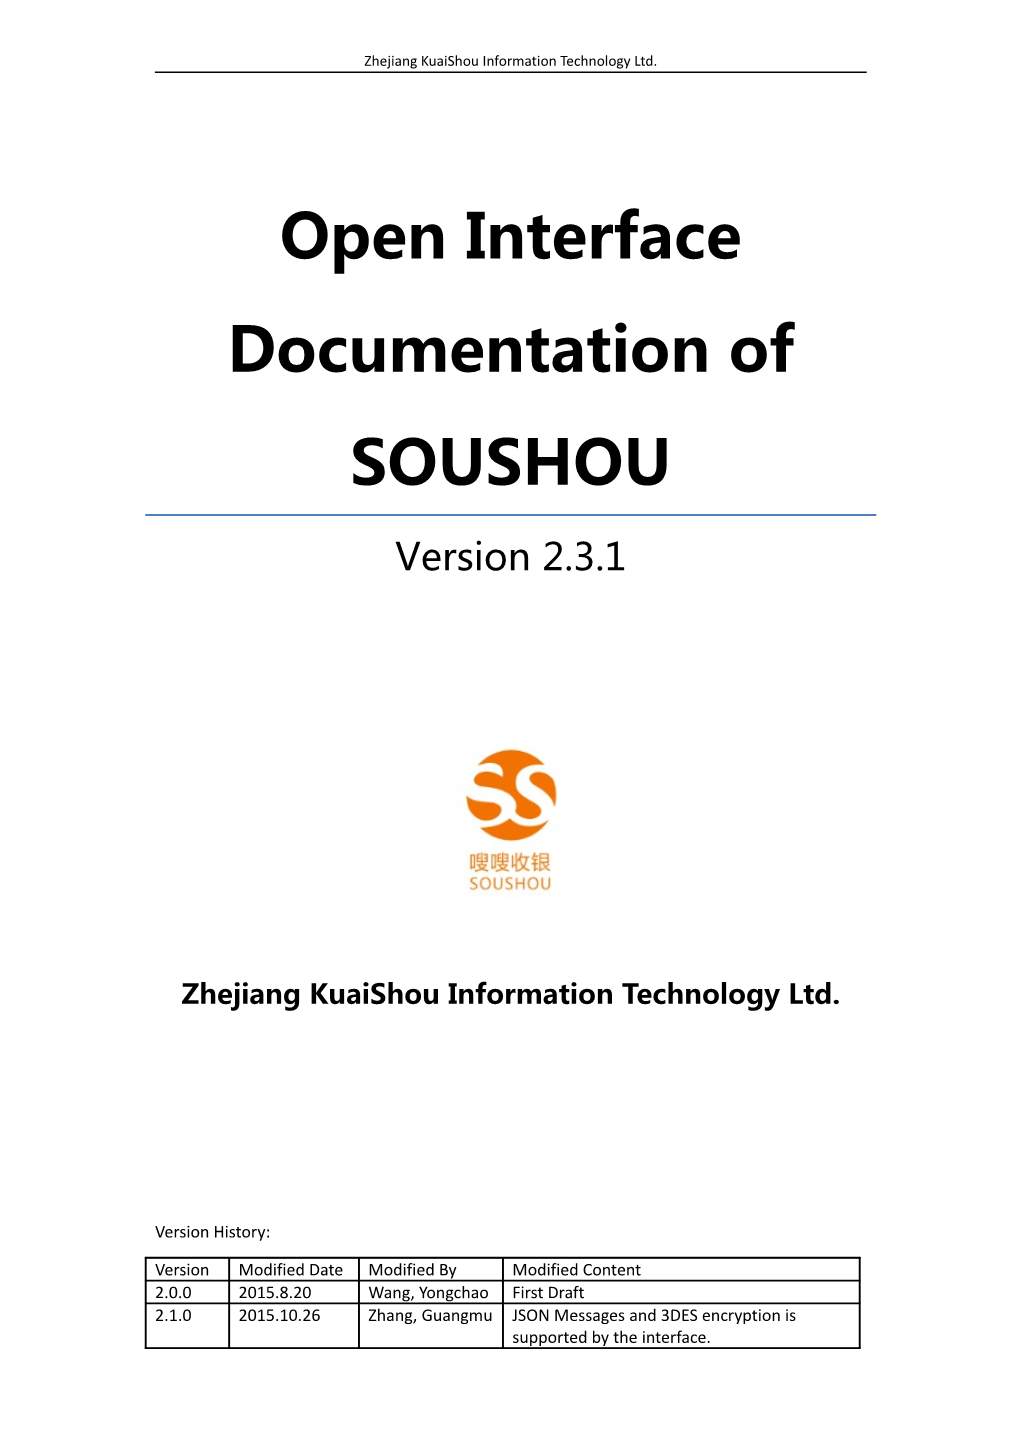 Open Interface Documentation of SOUSHOU